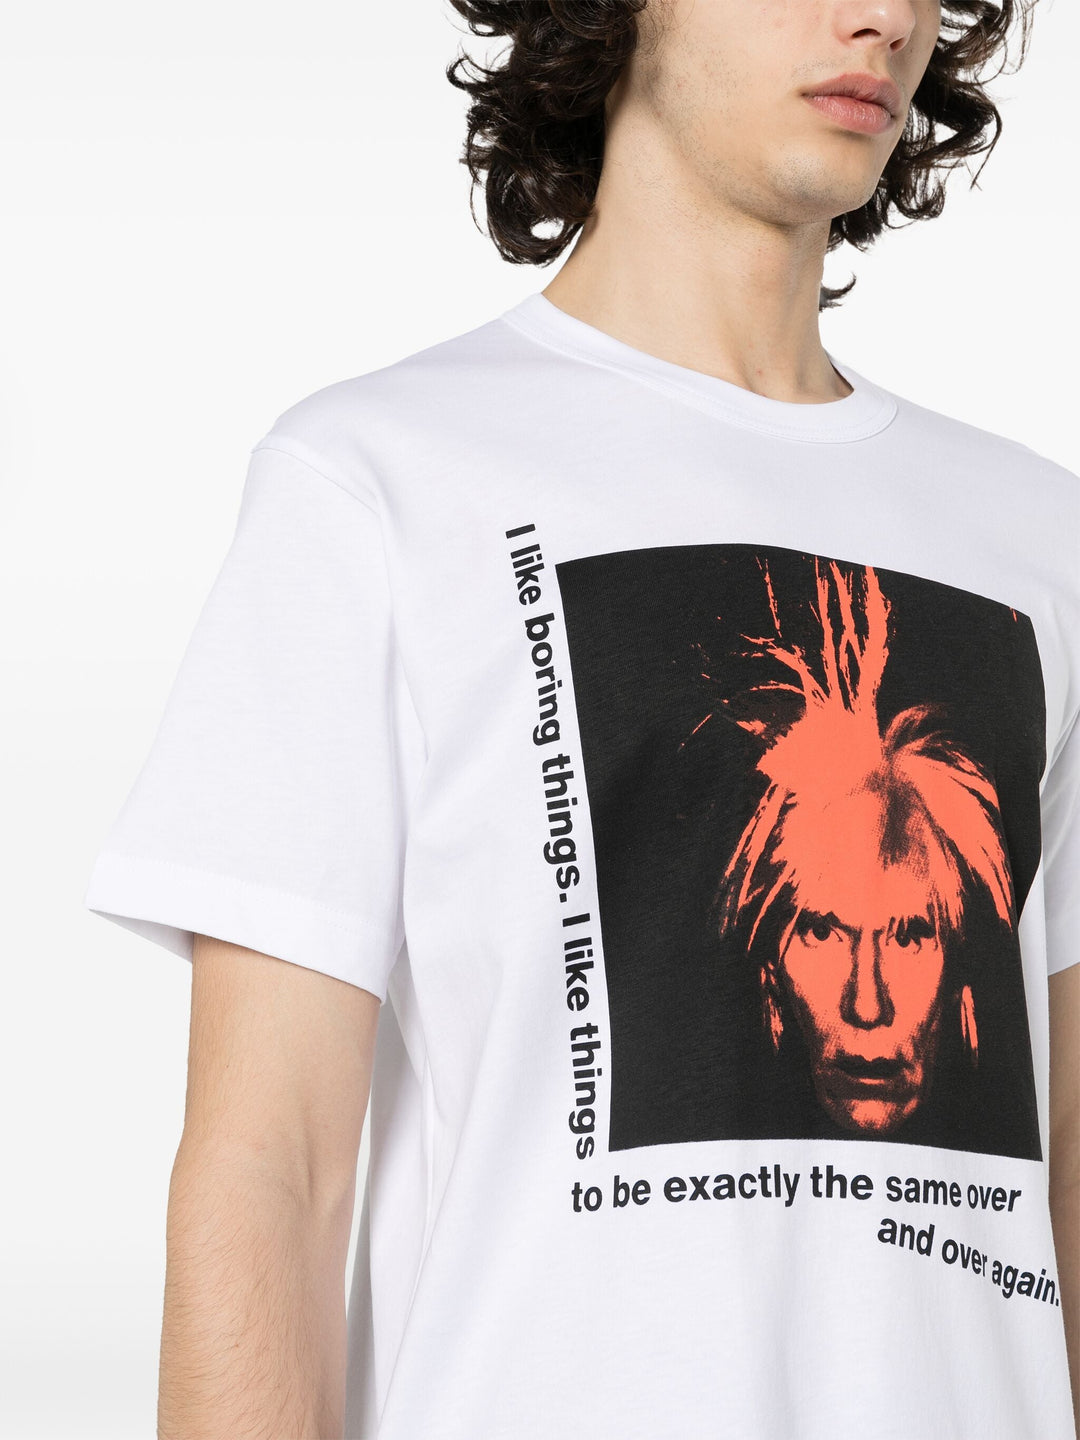 Andy Warhol X CDG Shirt Tee